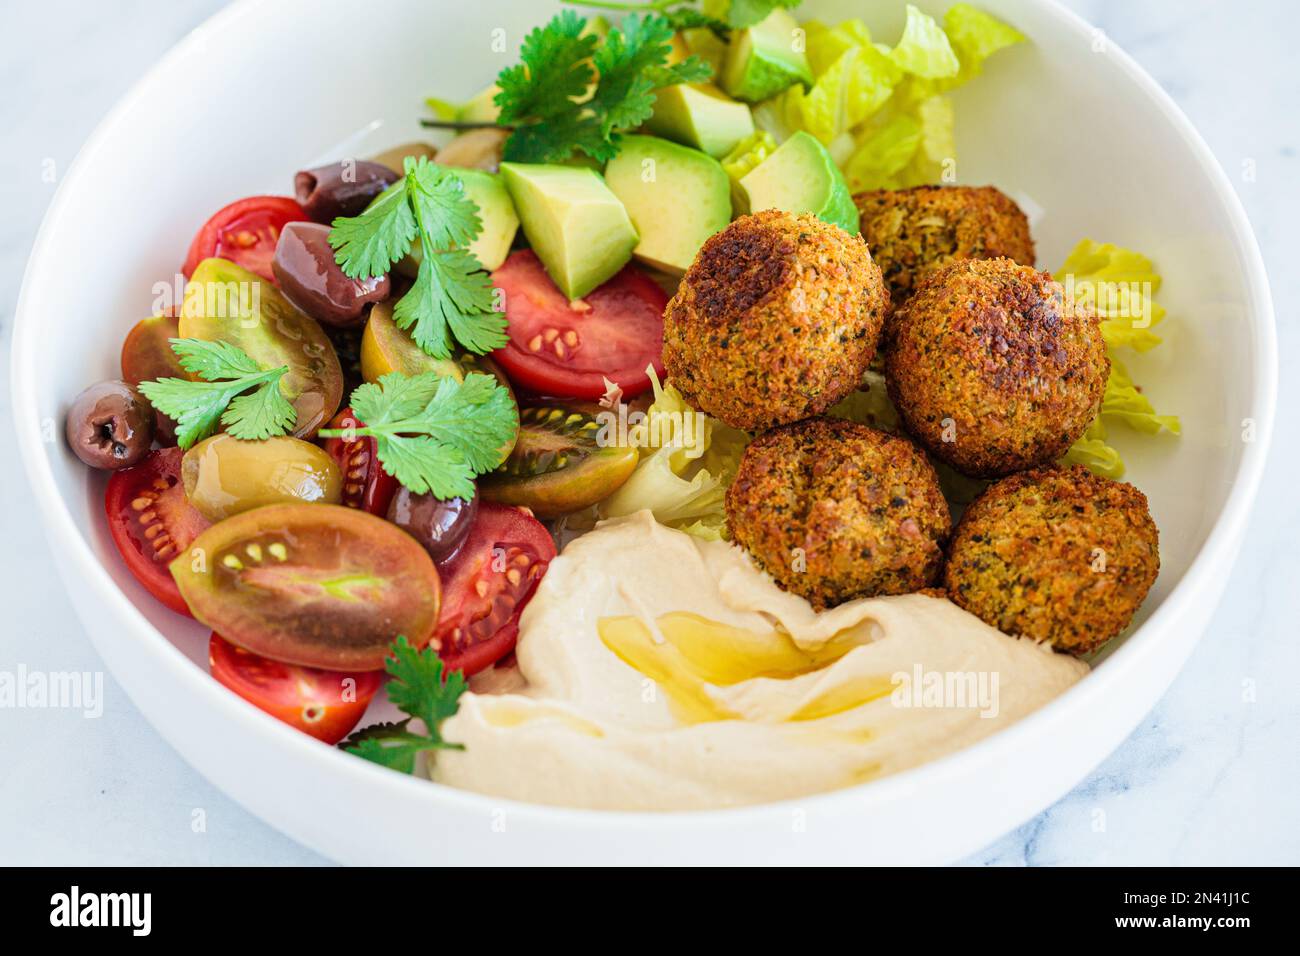 Falafel salad plate with lettuce, tomatoes, avocado, hummus and olives. Healthy vegan food, Israeli cuisine. Stock Photo